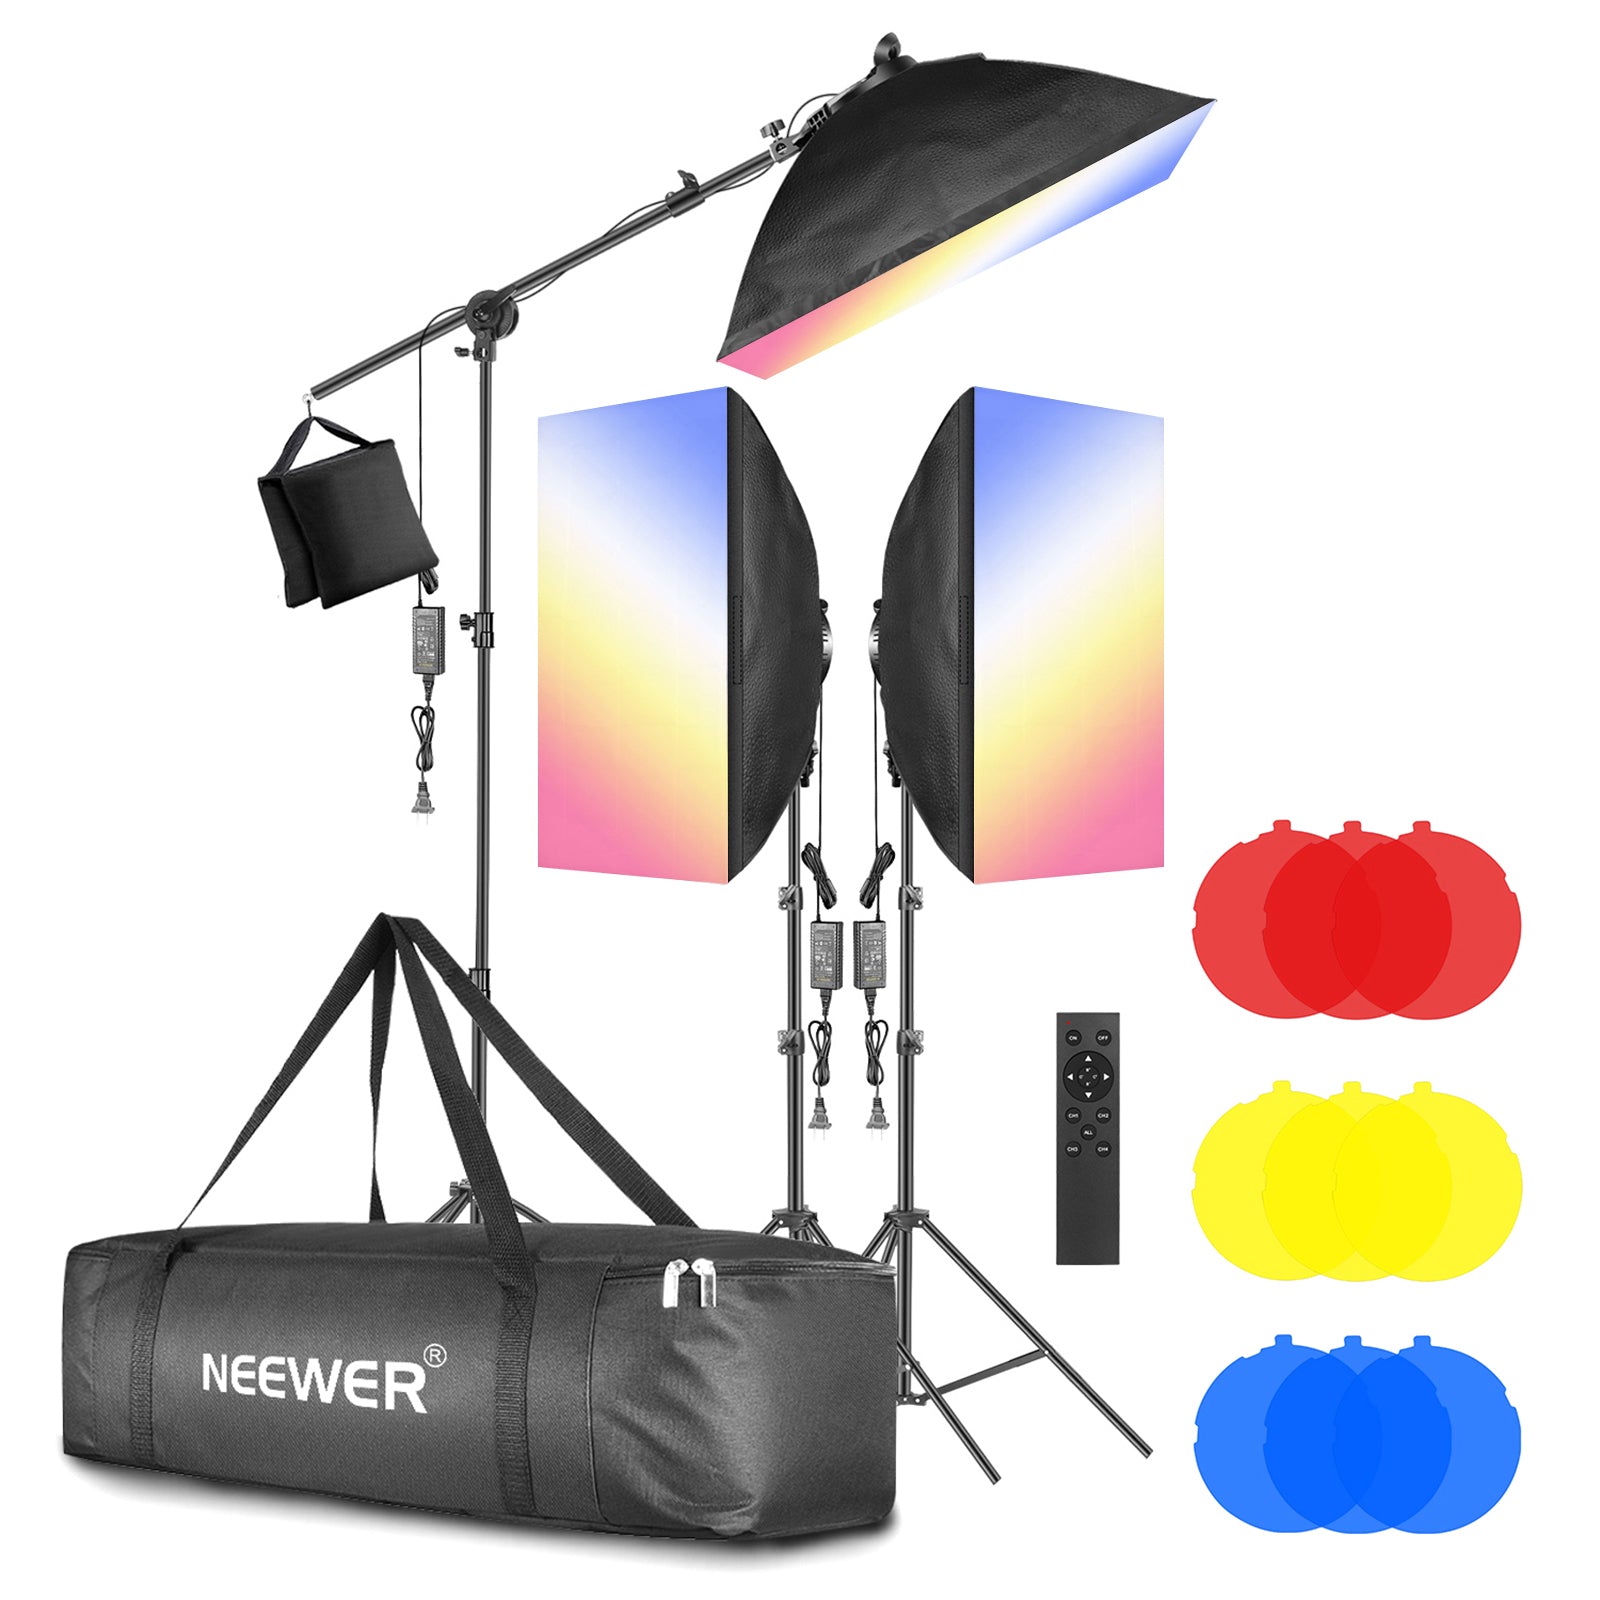 Neewer 2.4G RGB LED Light Stick, 3-Pack Photography Lighting Kit